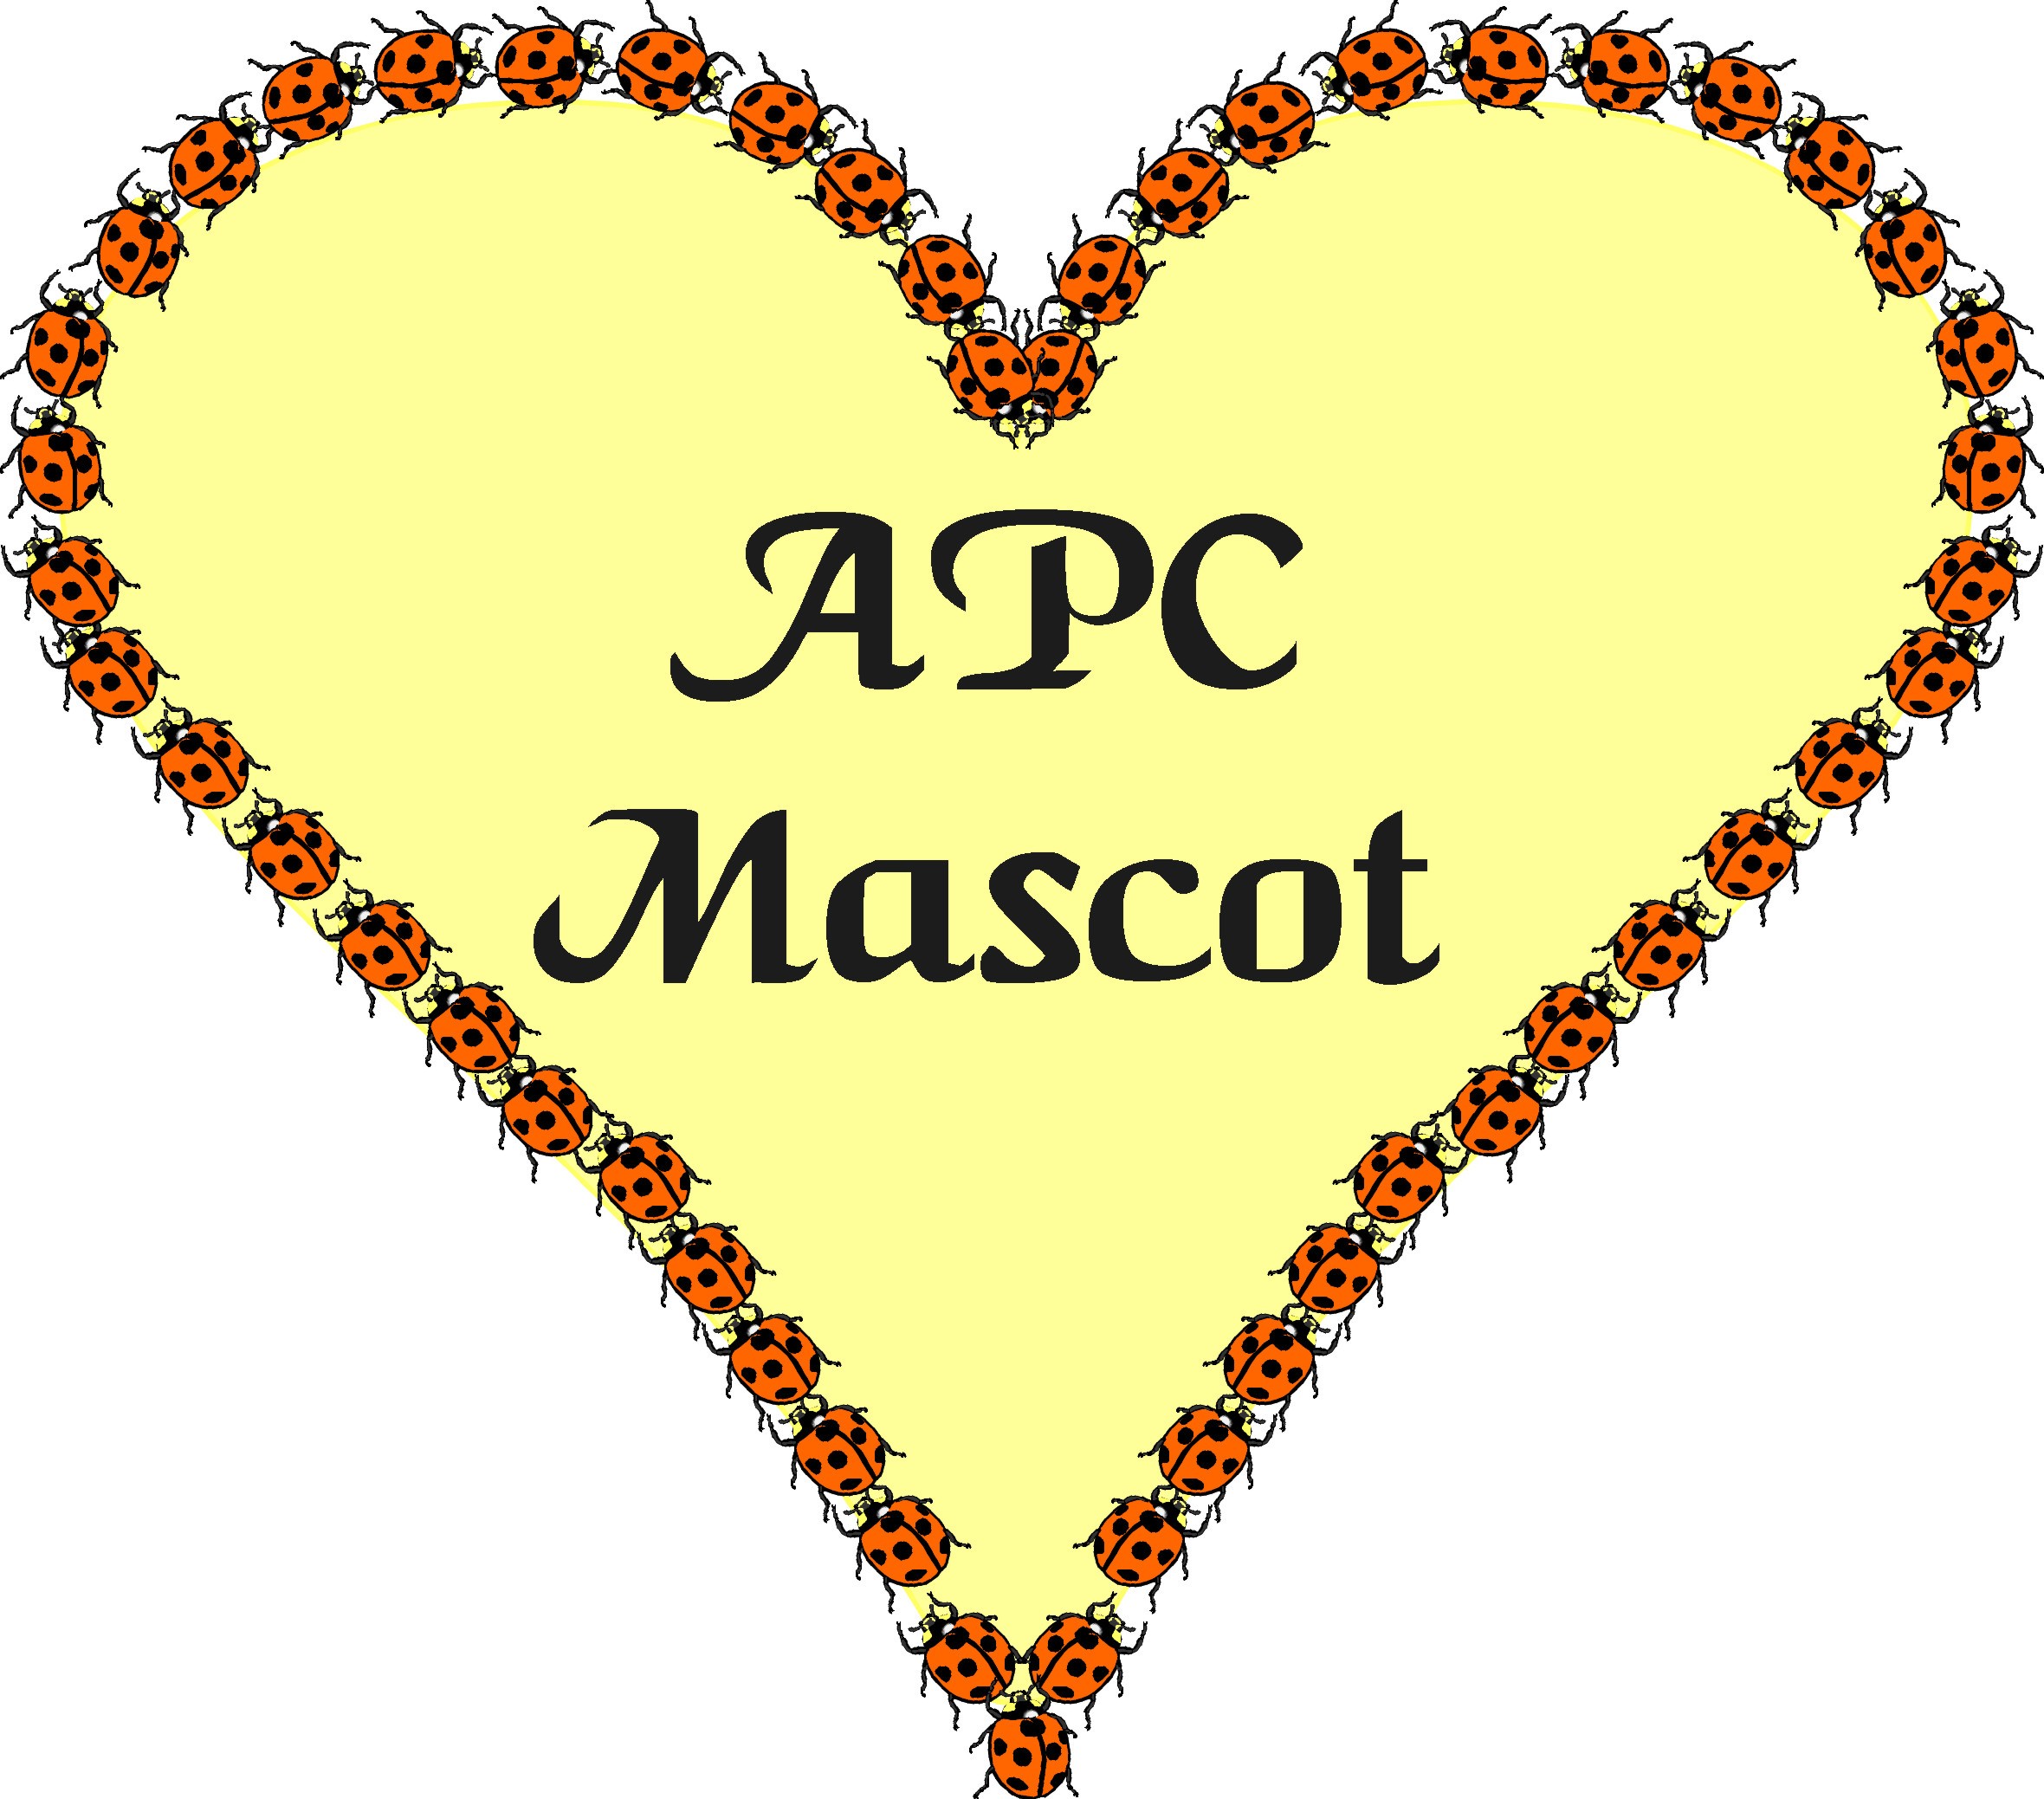 APC mascot ladybug heart t-shirt.